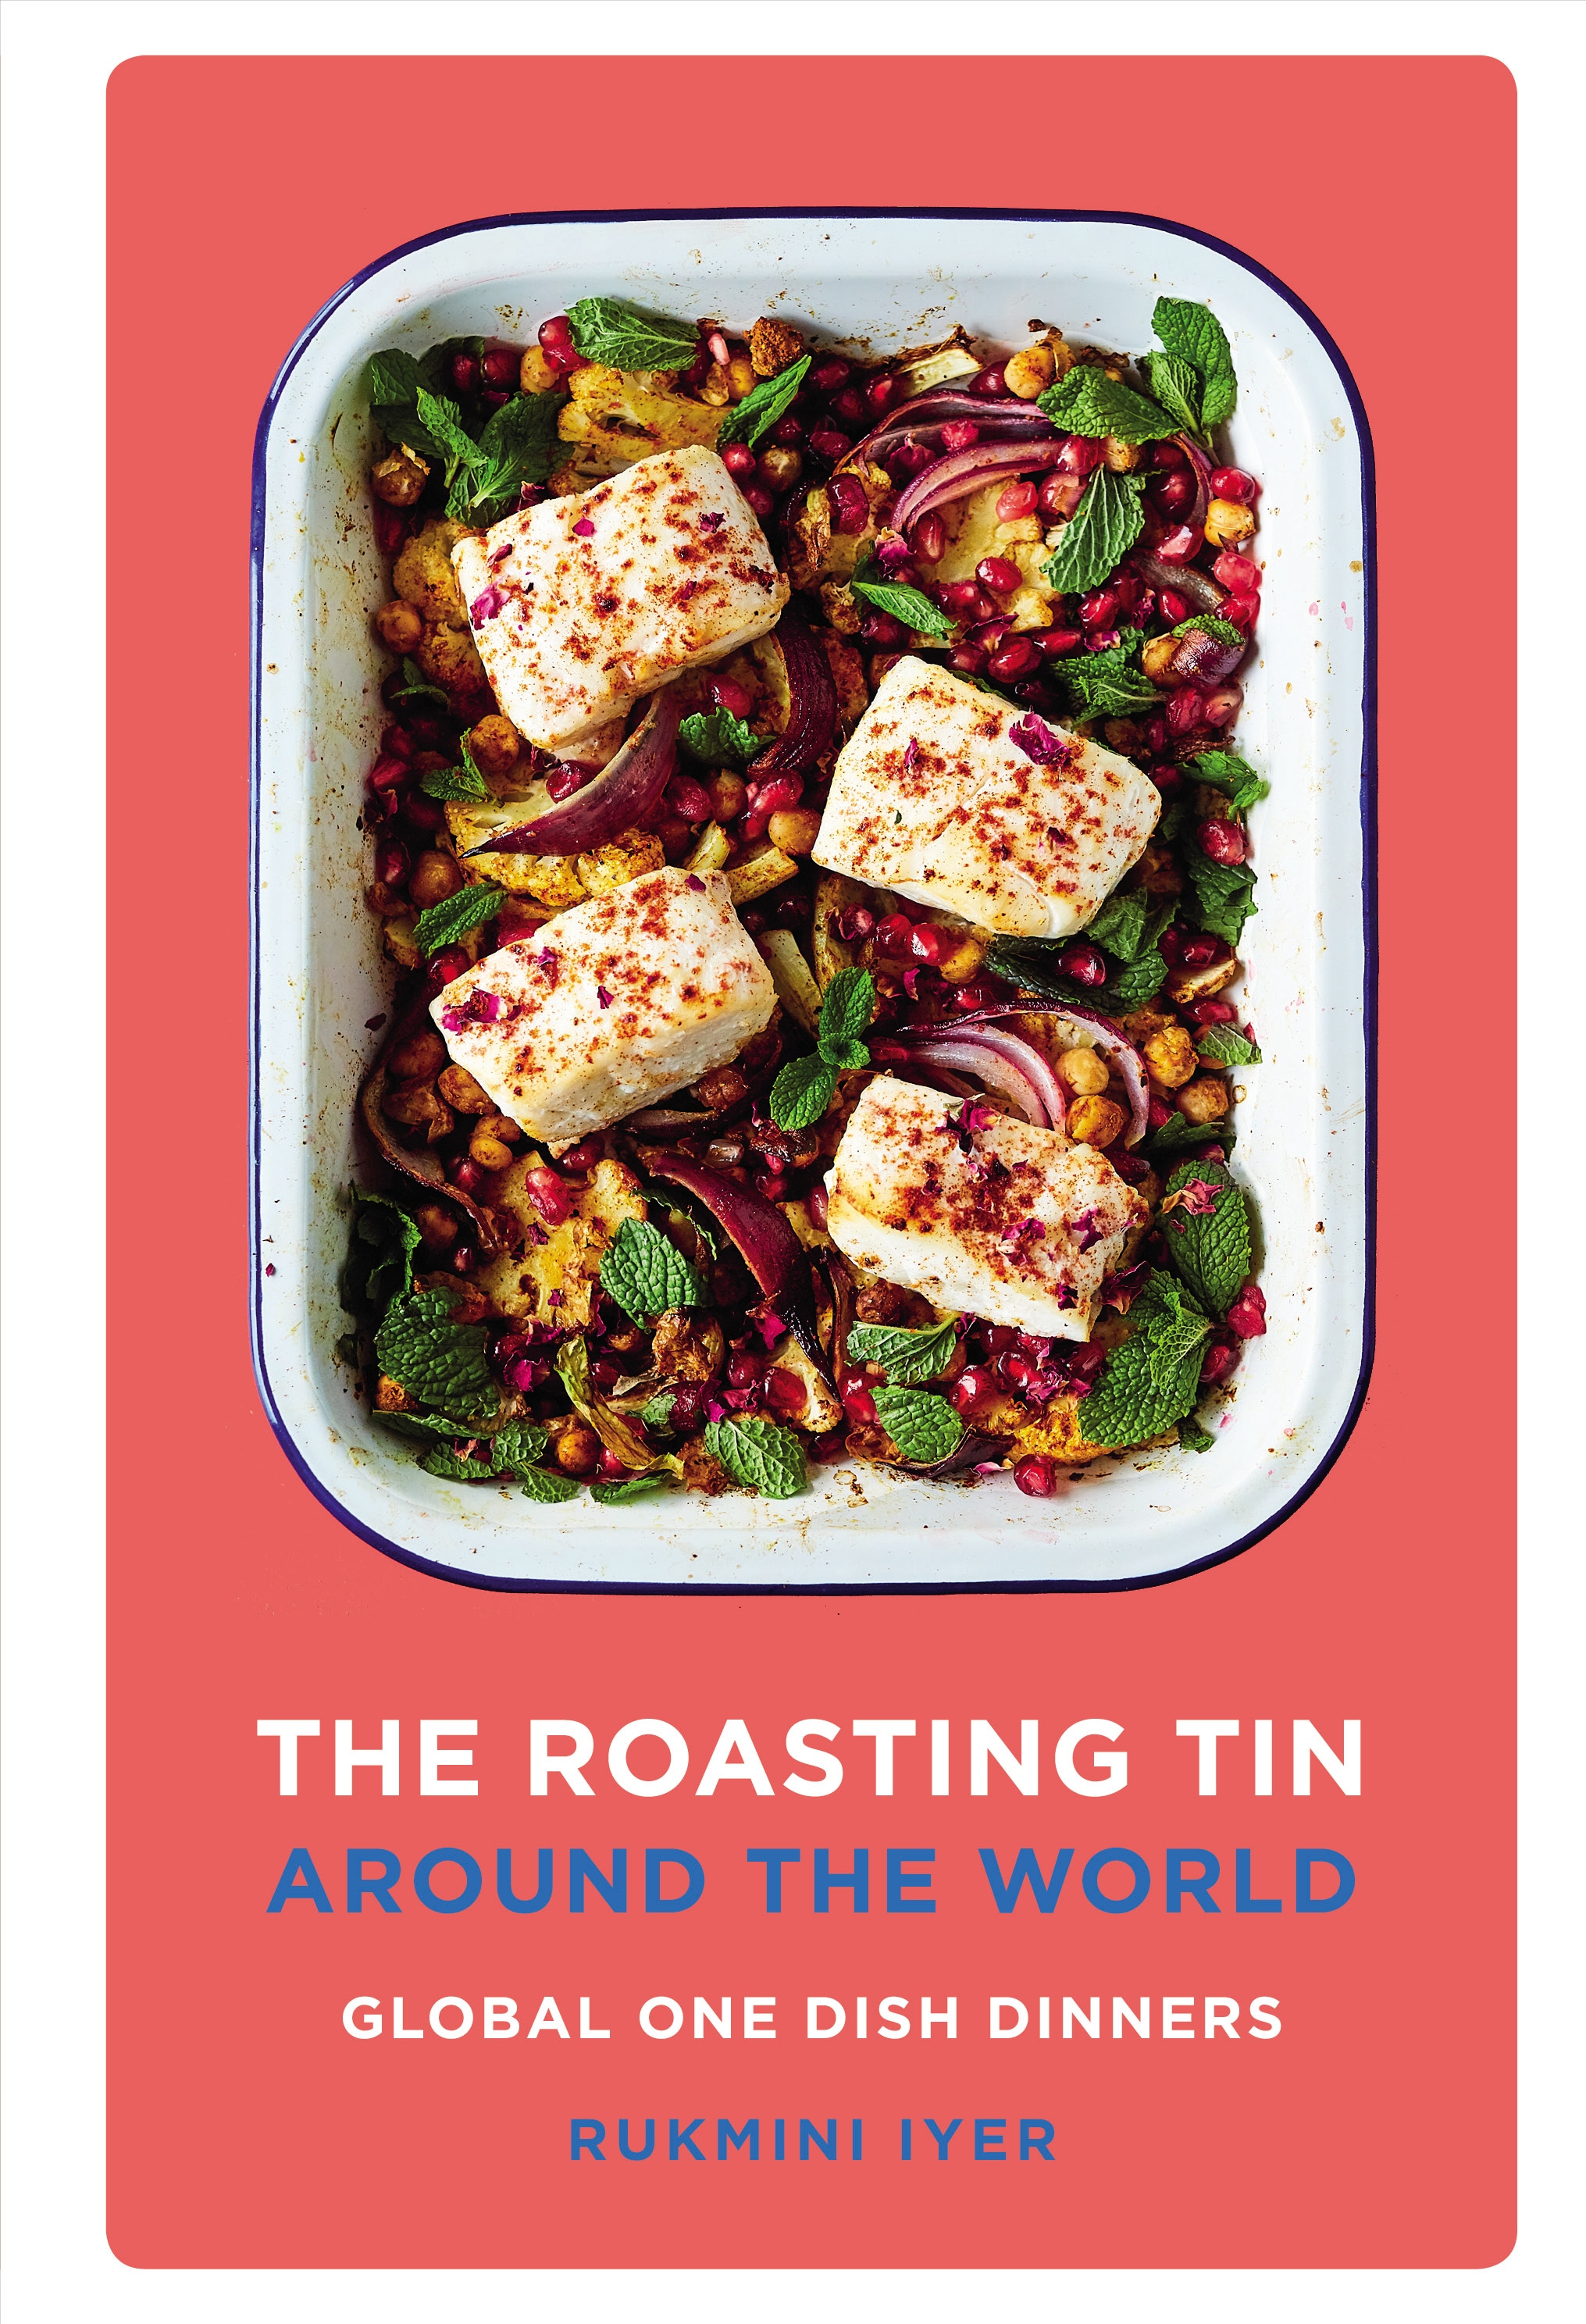 Book “The Roasting Tin Around the World” by Rukmini Iyer — April 30, 2020